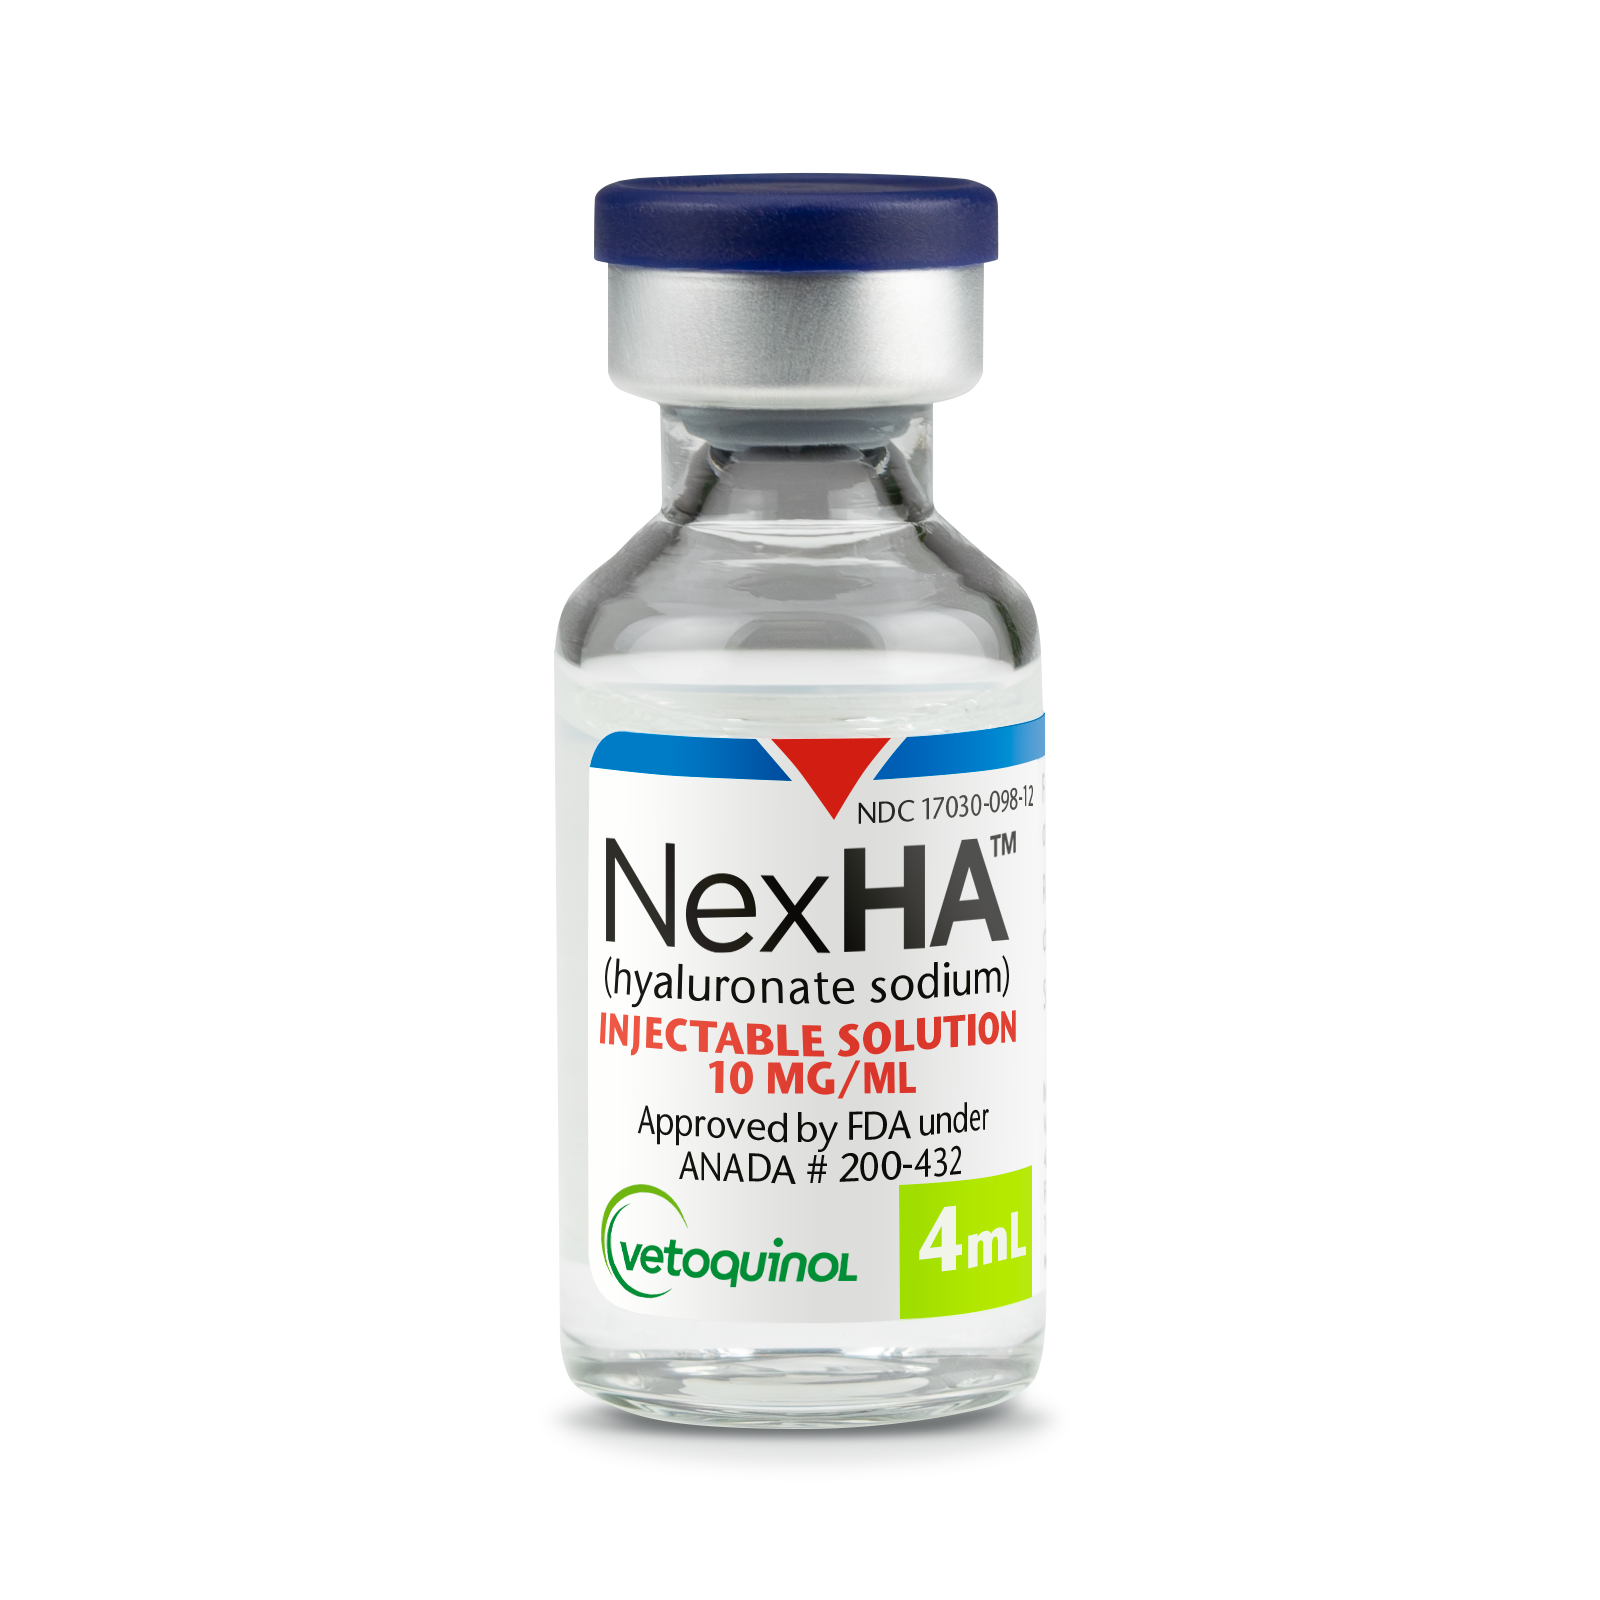 NexHA™ (hyaluronate sodium) Injectable Solution Bottle